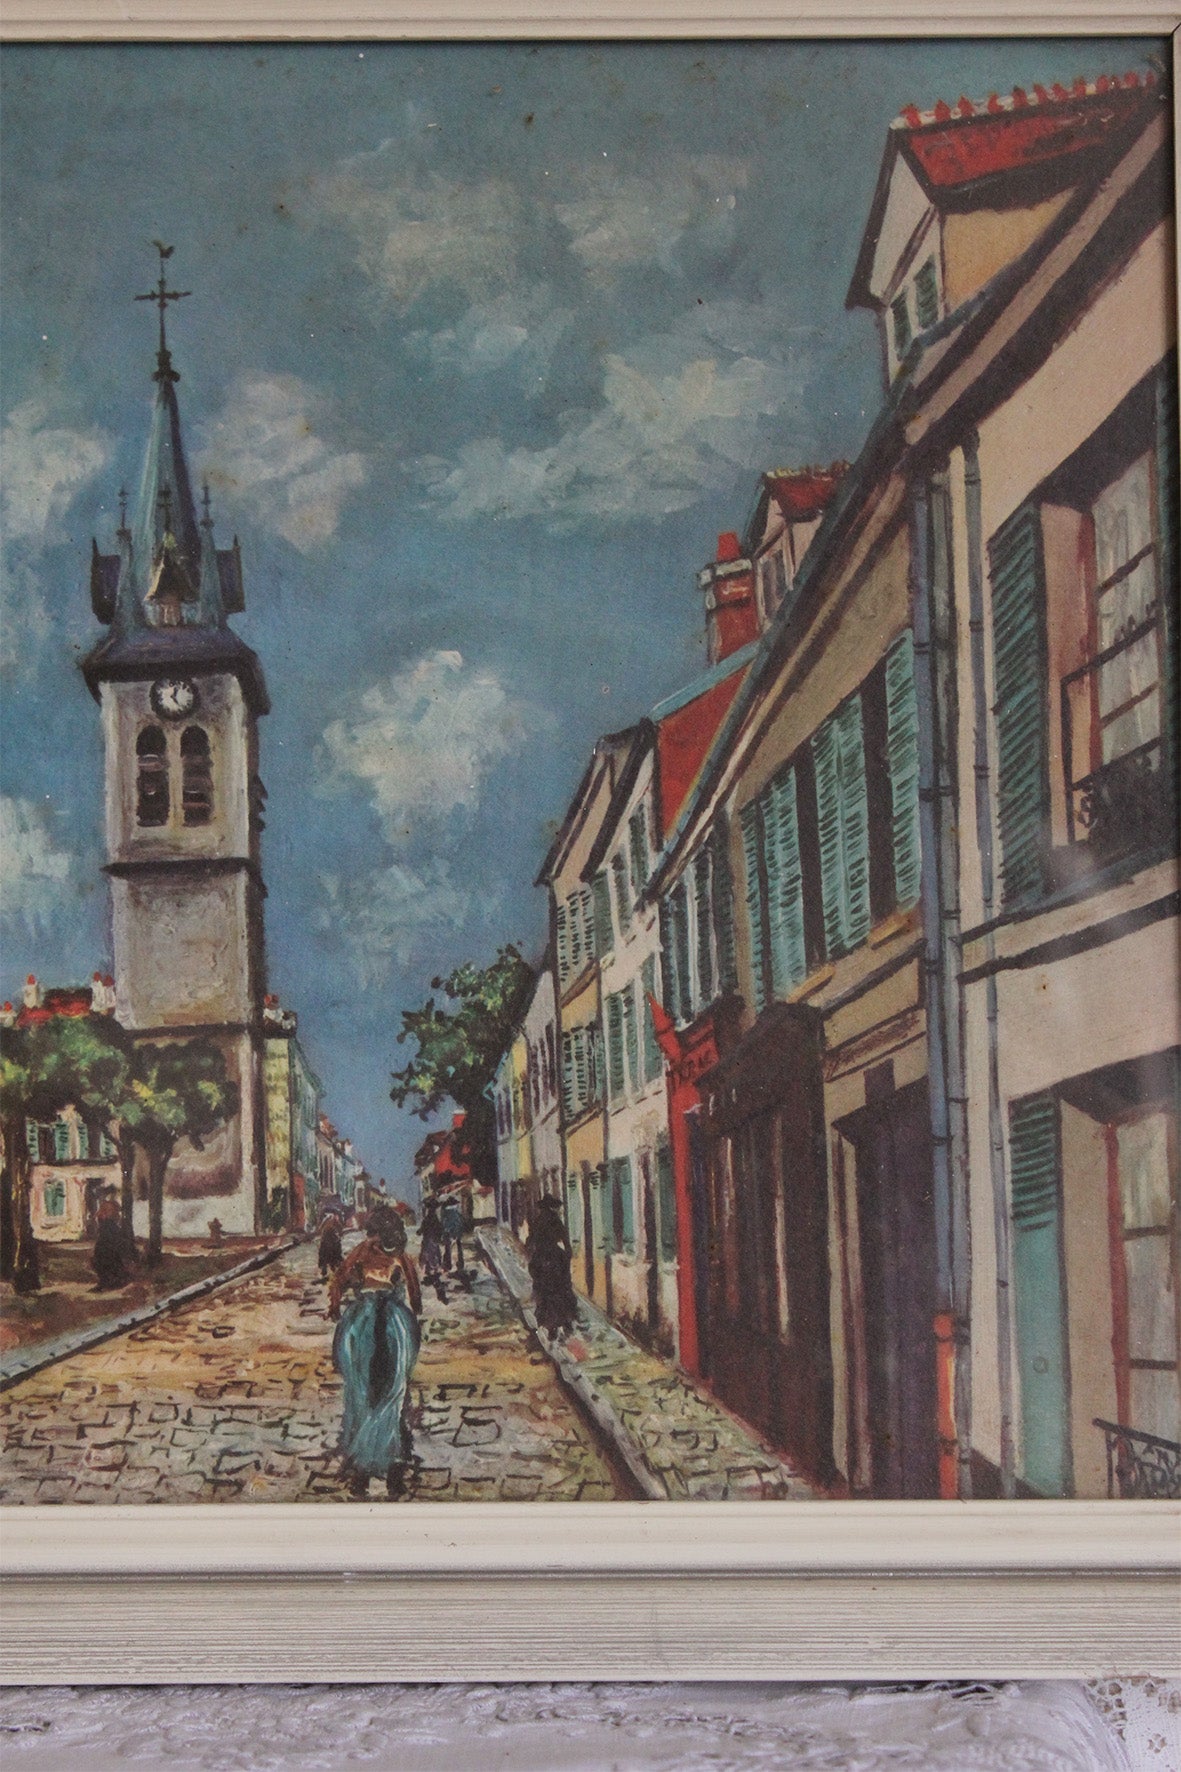 Old Maurice Utrillo Print - "La Banlieue"